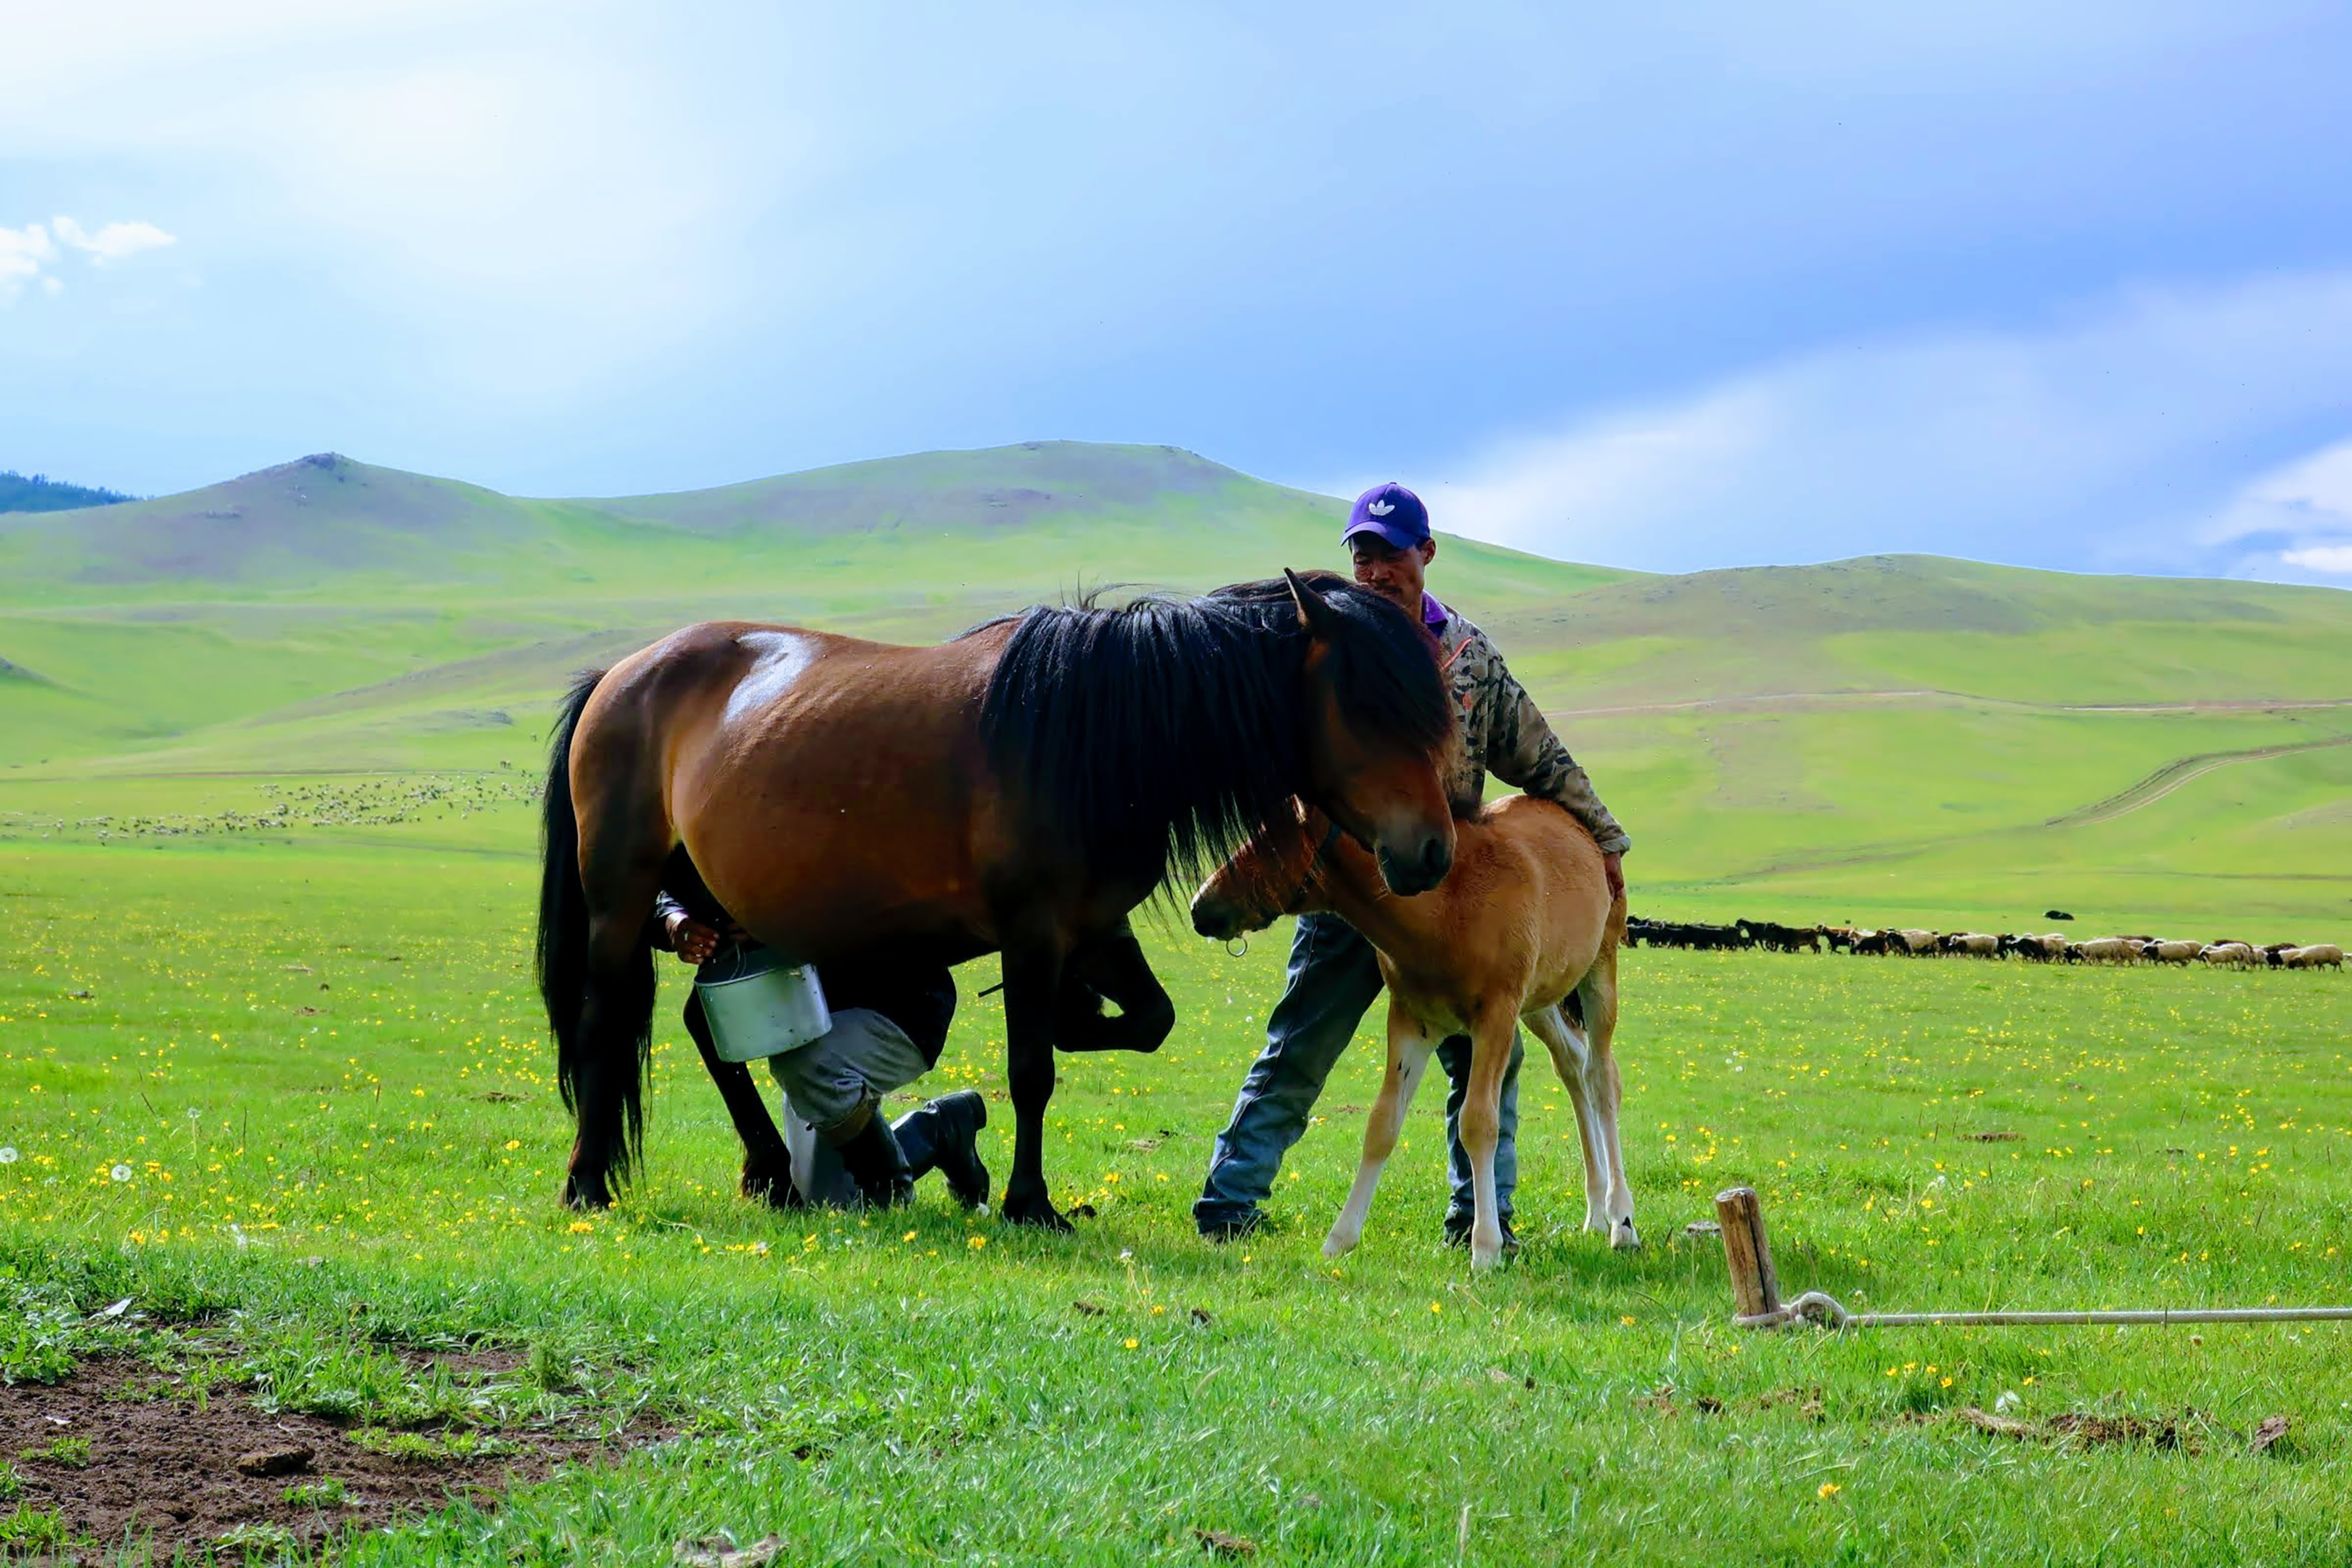 Horse milking in Mongolia